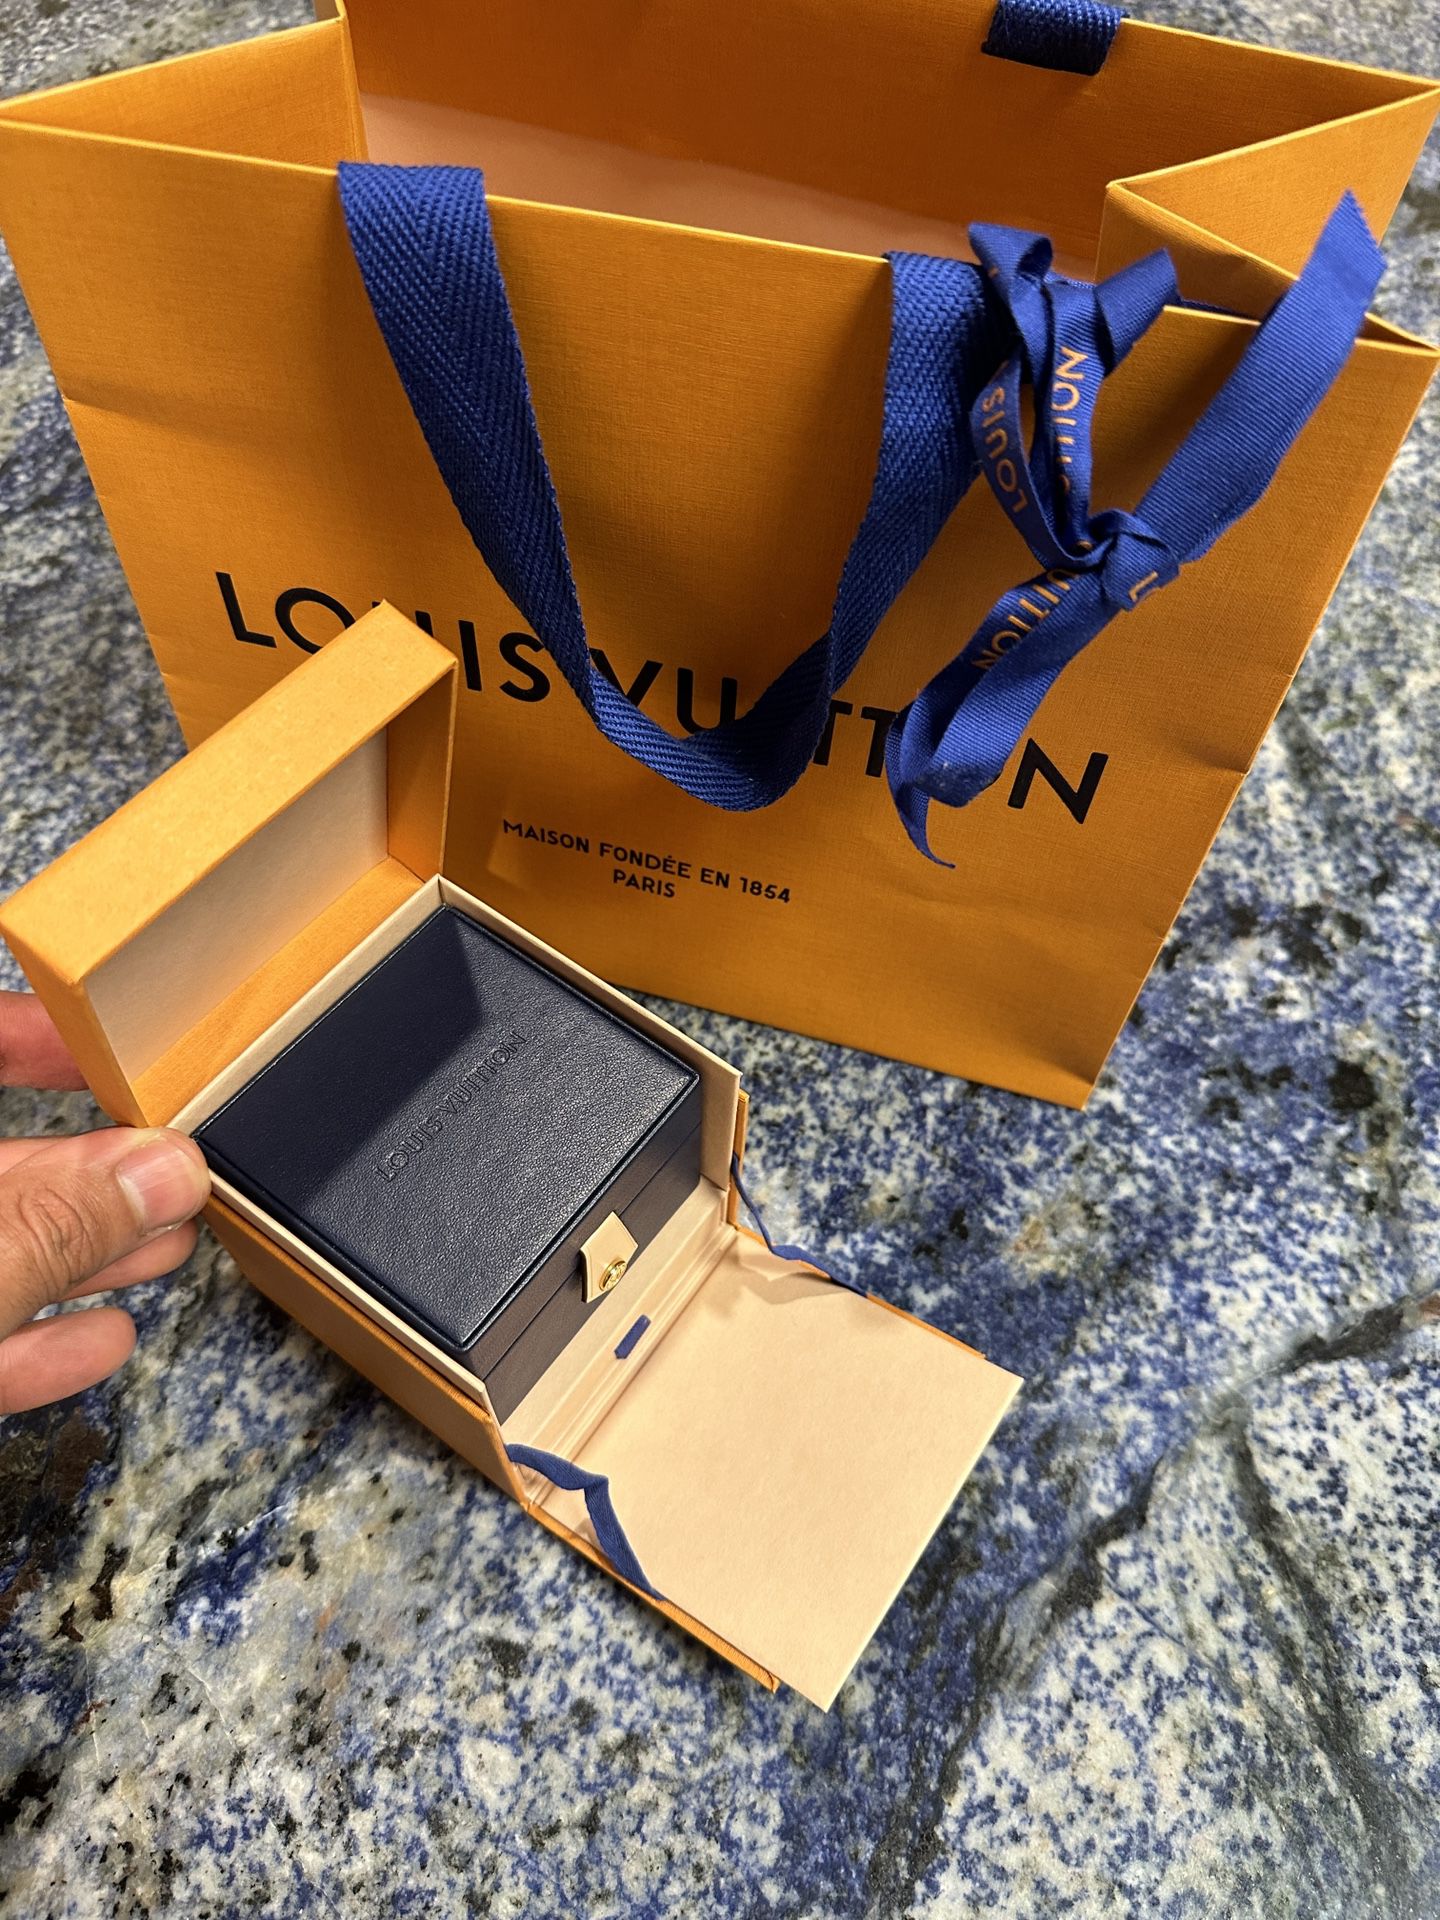 Louis Vuitton Empreinte Black Cord 18K Yellow Gold Lace Bracelet